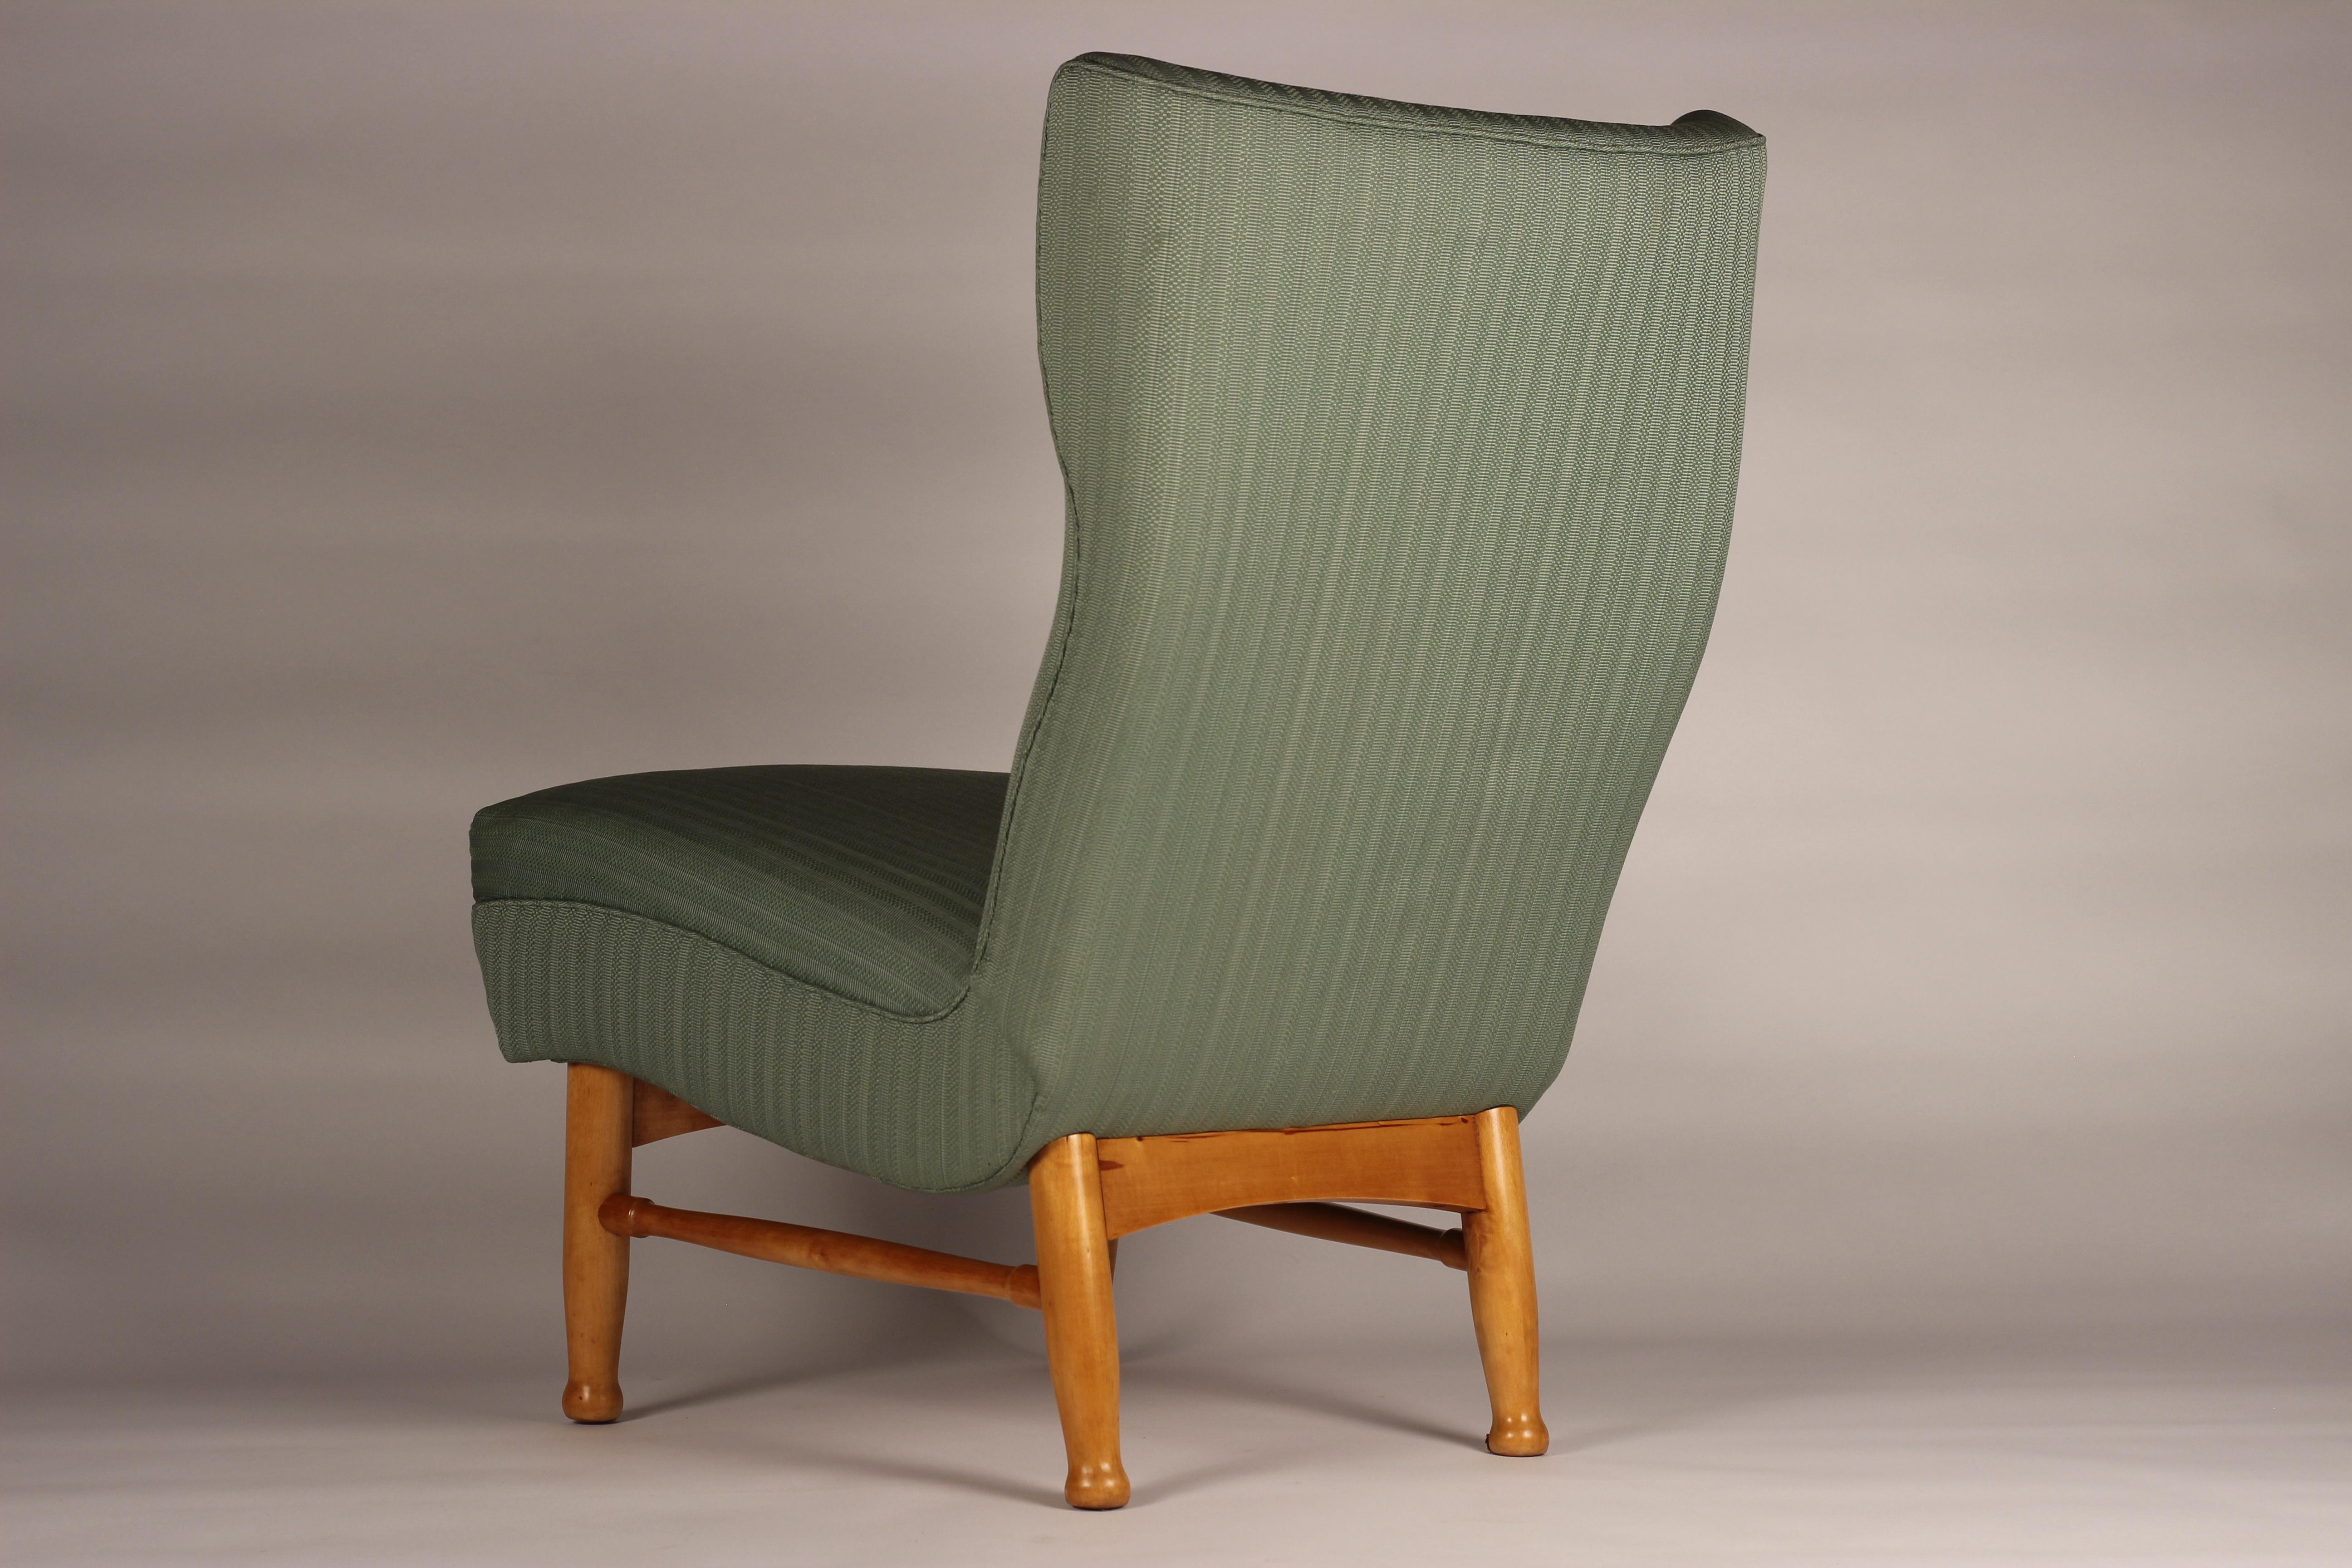 Swedish Scandinavian Modern Chair by Elias Svedberg for Nordiska Kompaniet Sweden 1950’s